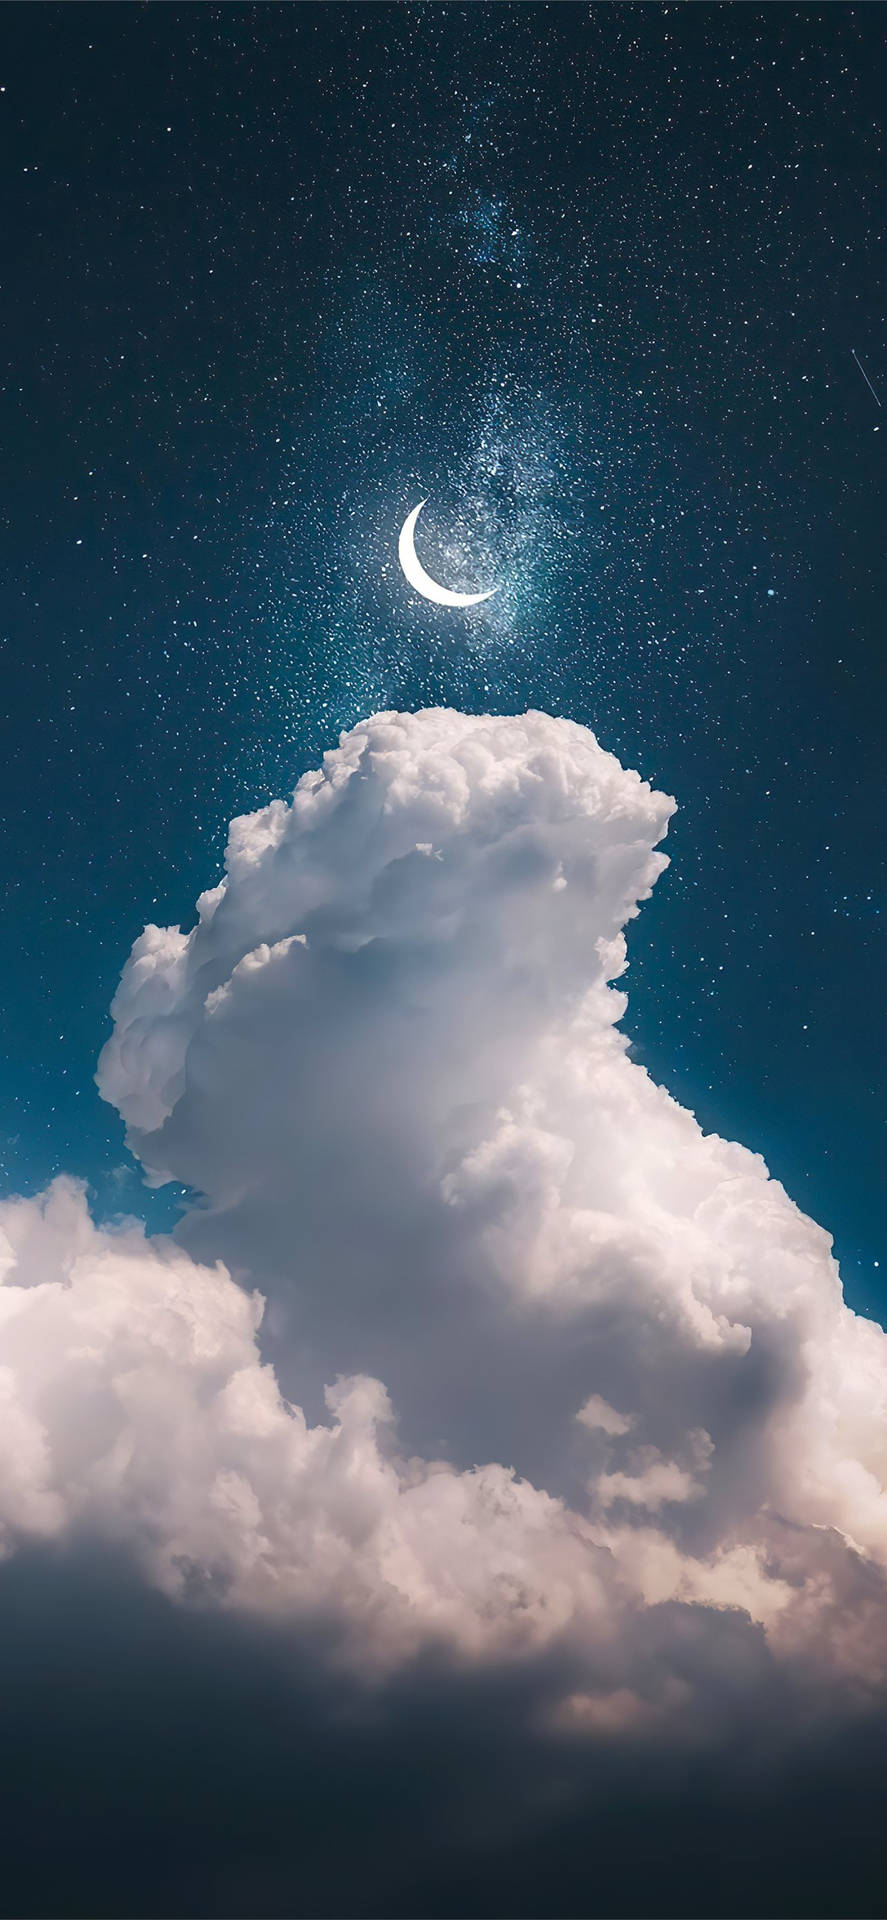 moon clouds sky light night wallpaper background full HD - pling.com